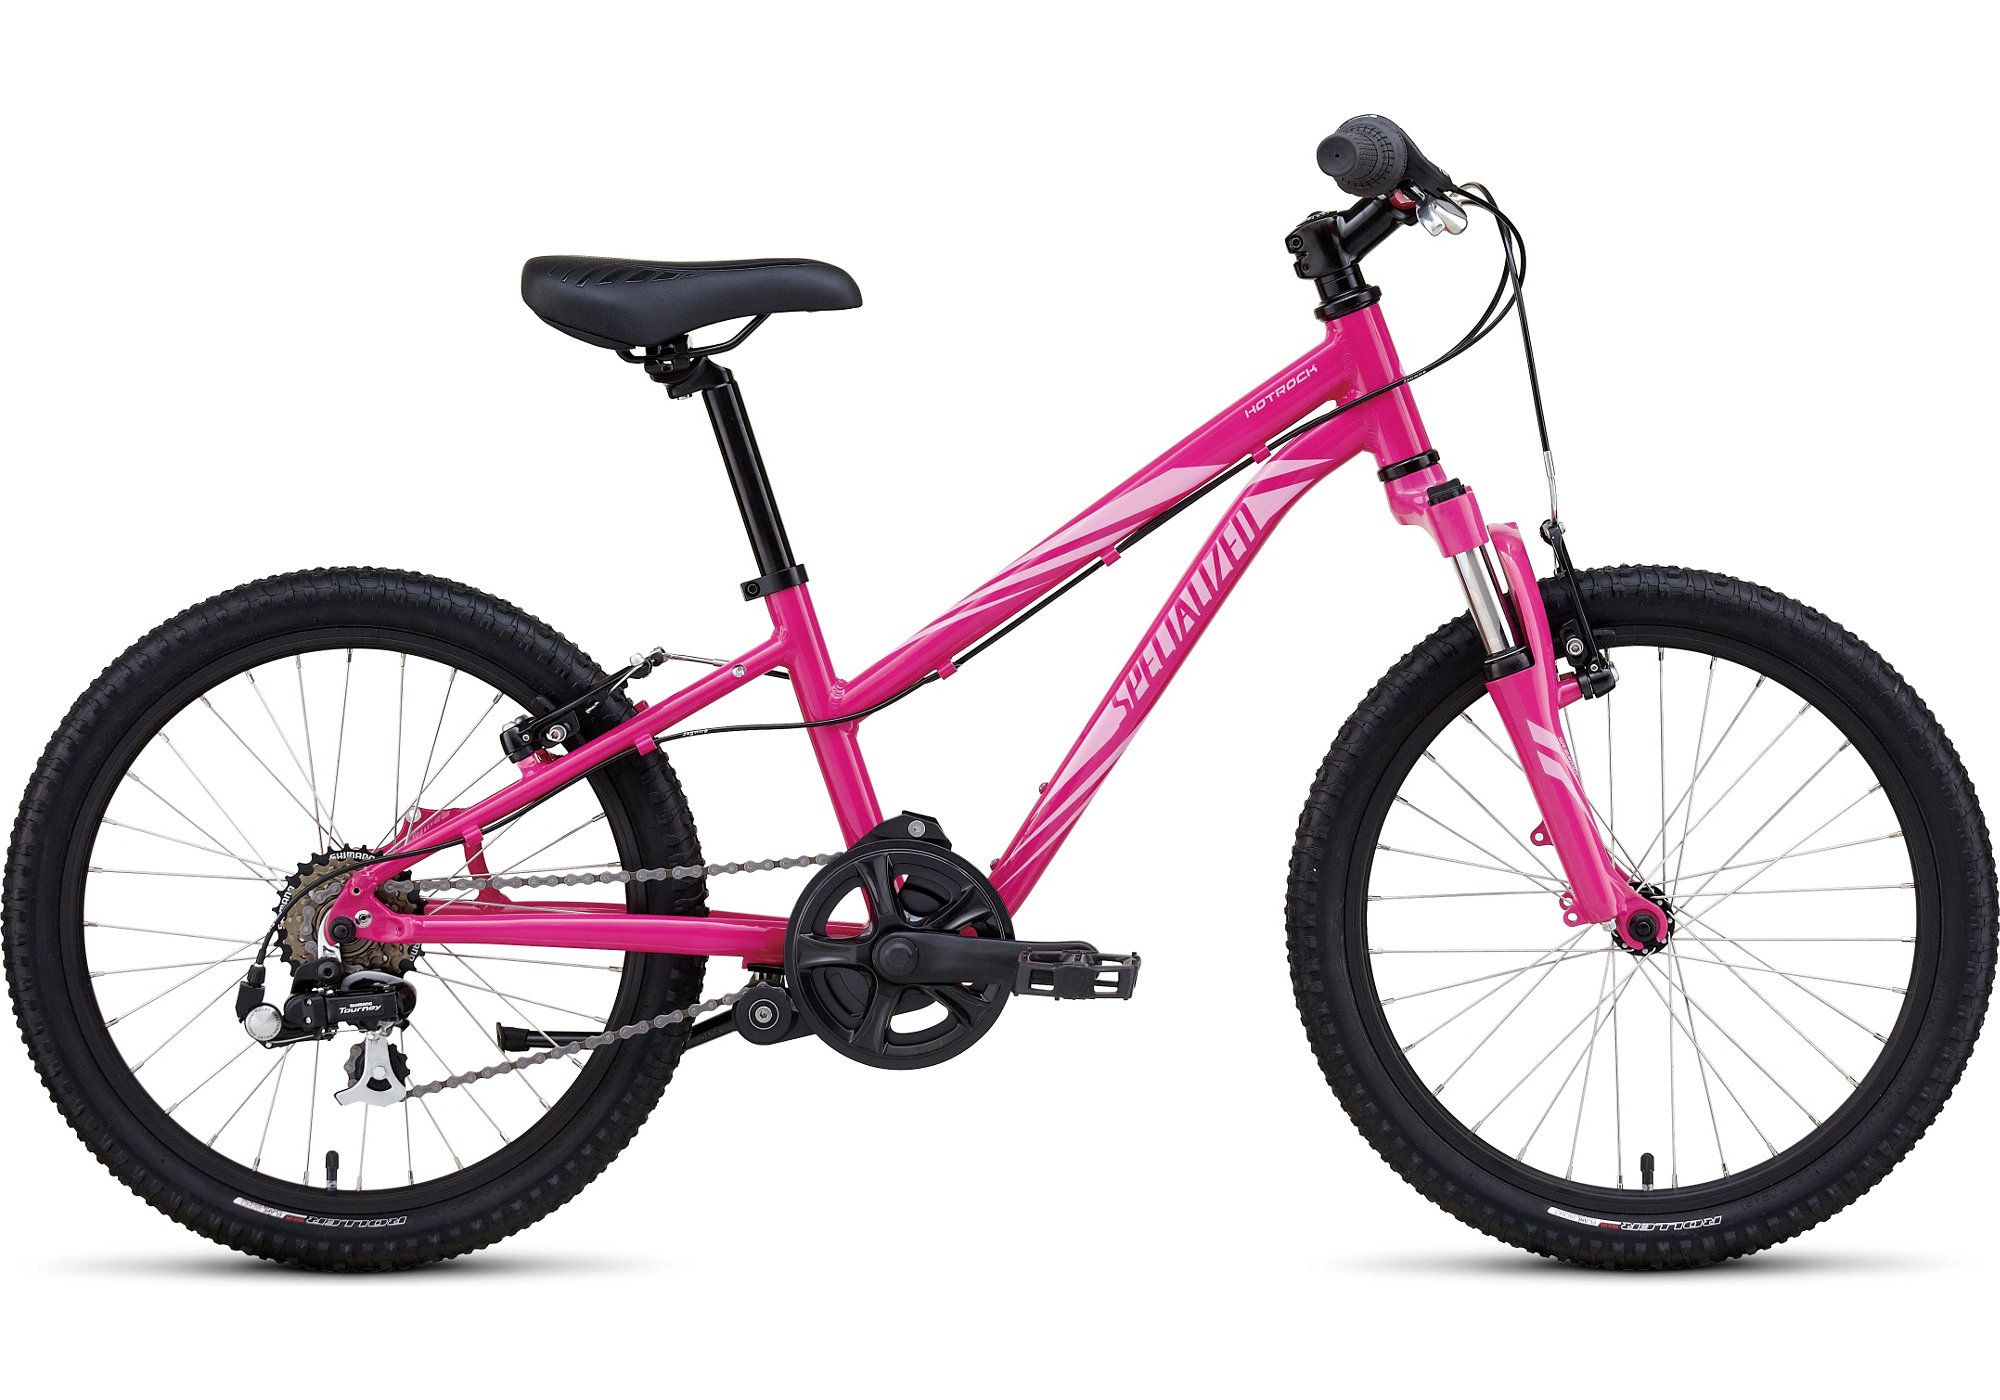  Отзывы о Детском велосипеде Specialized Hotrock 20 6 speed girl 2016